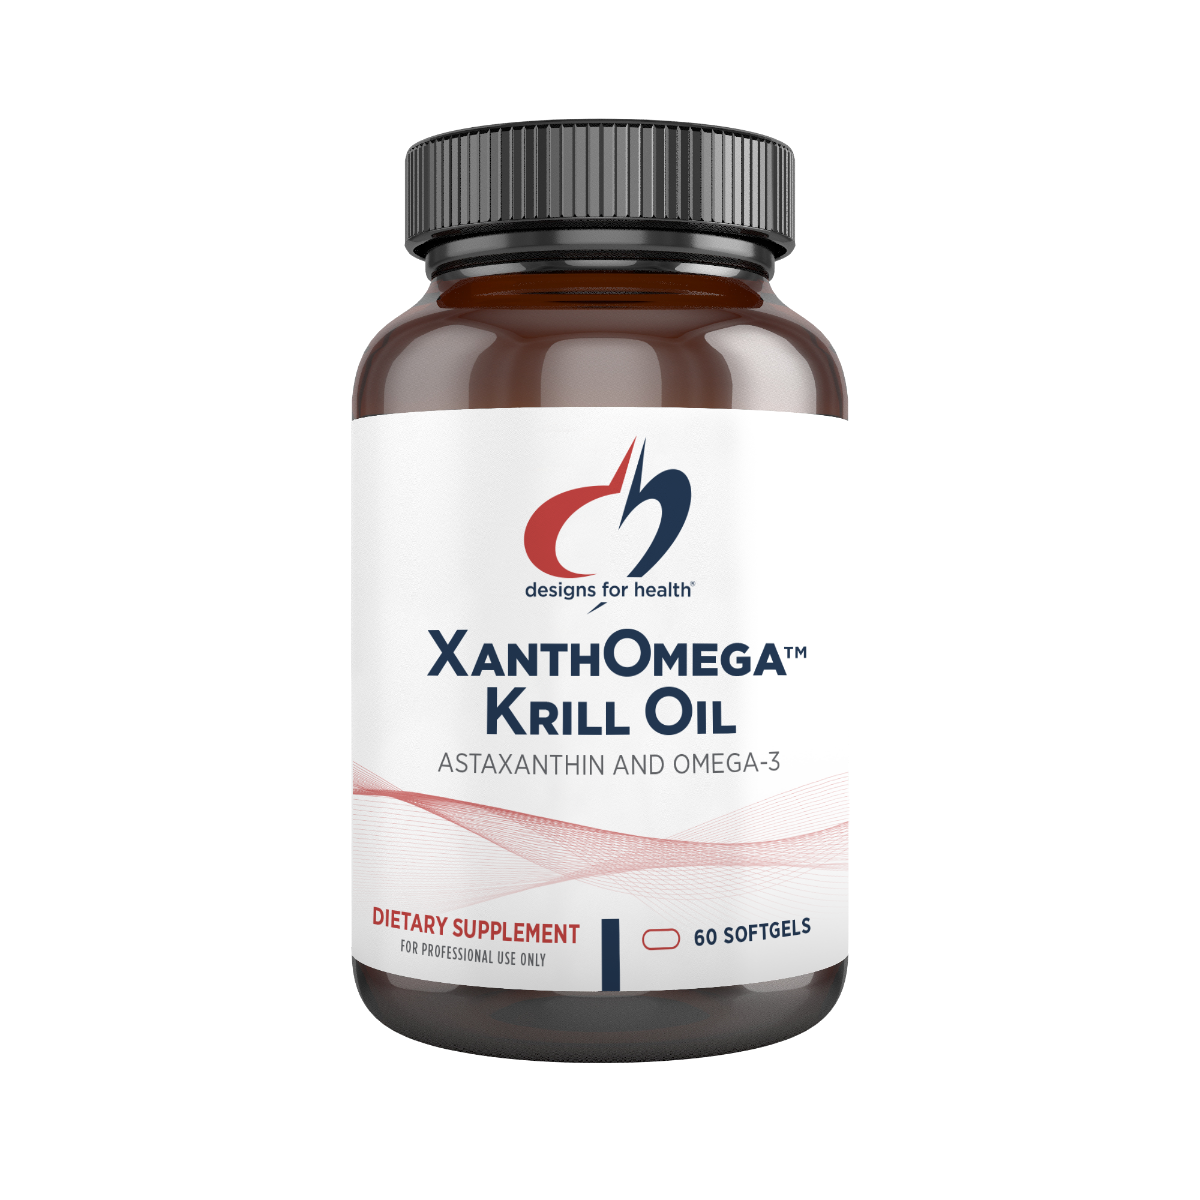 XanthOmega Krill Oil